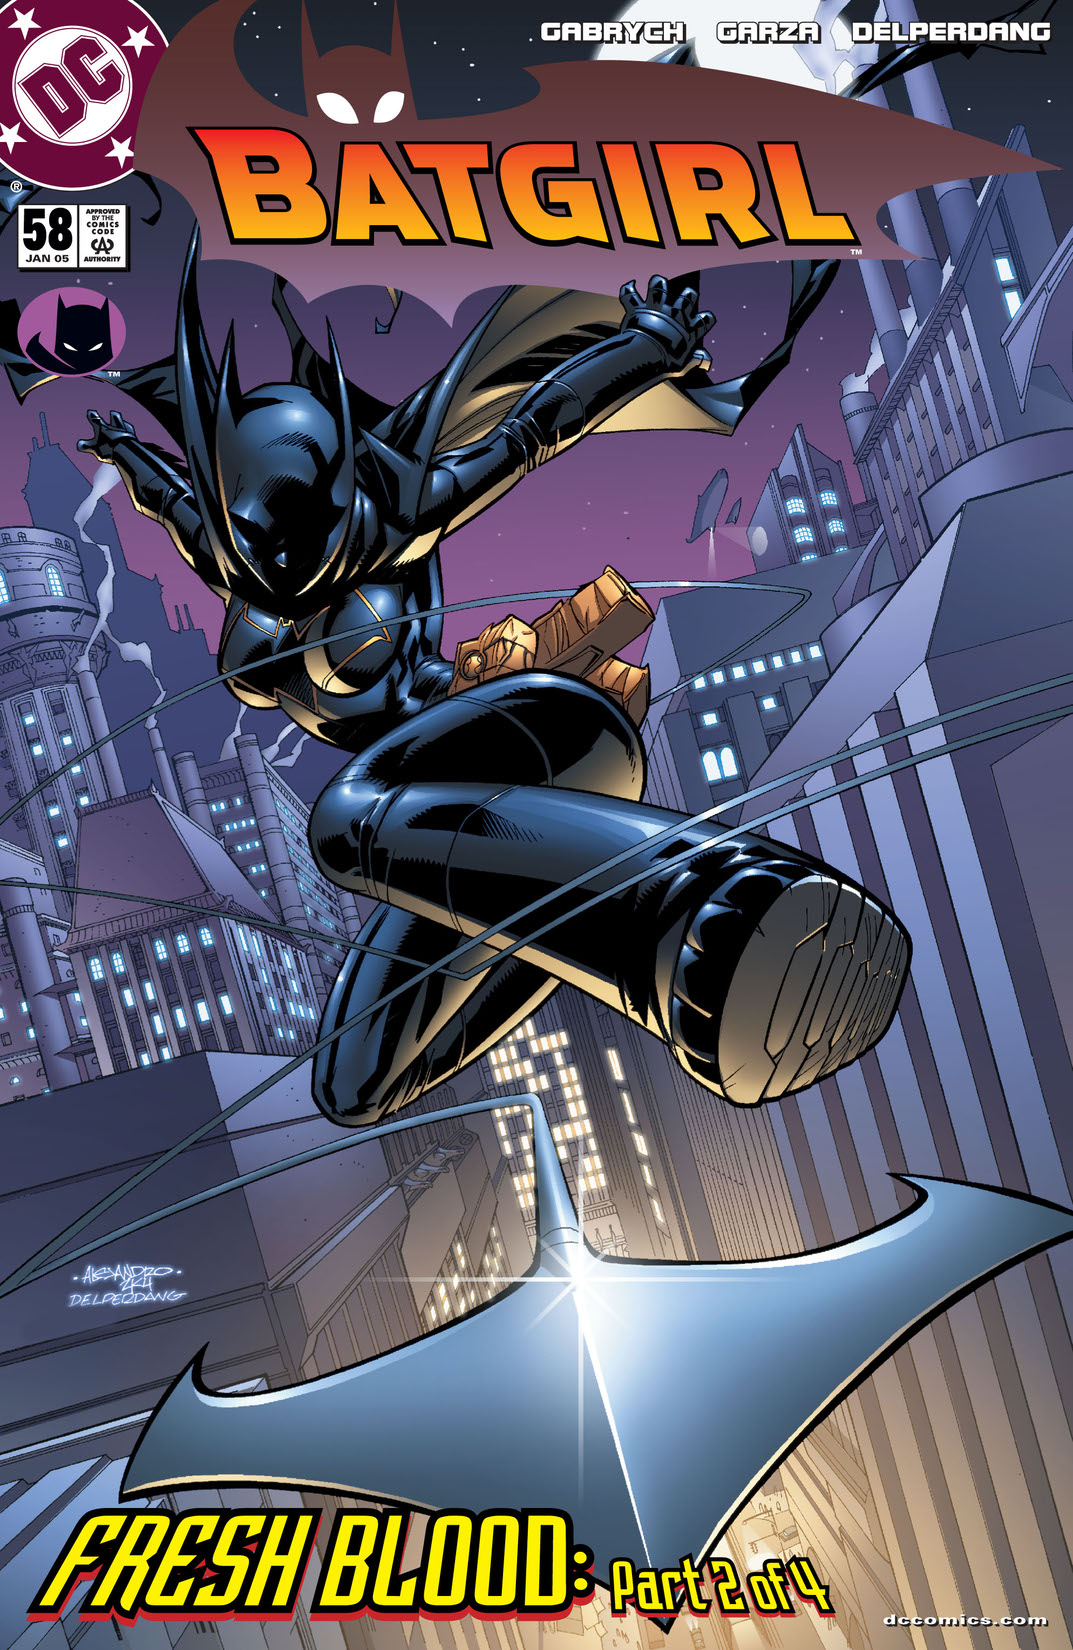 Batgirl (2000-) #58 preview images